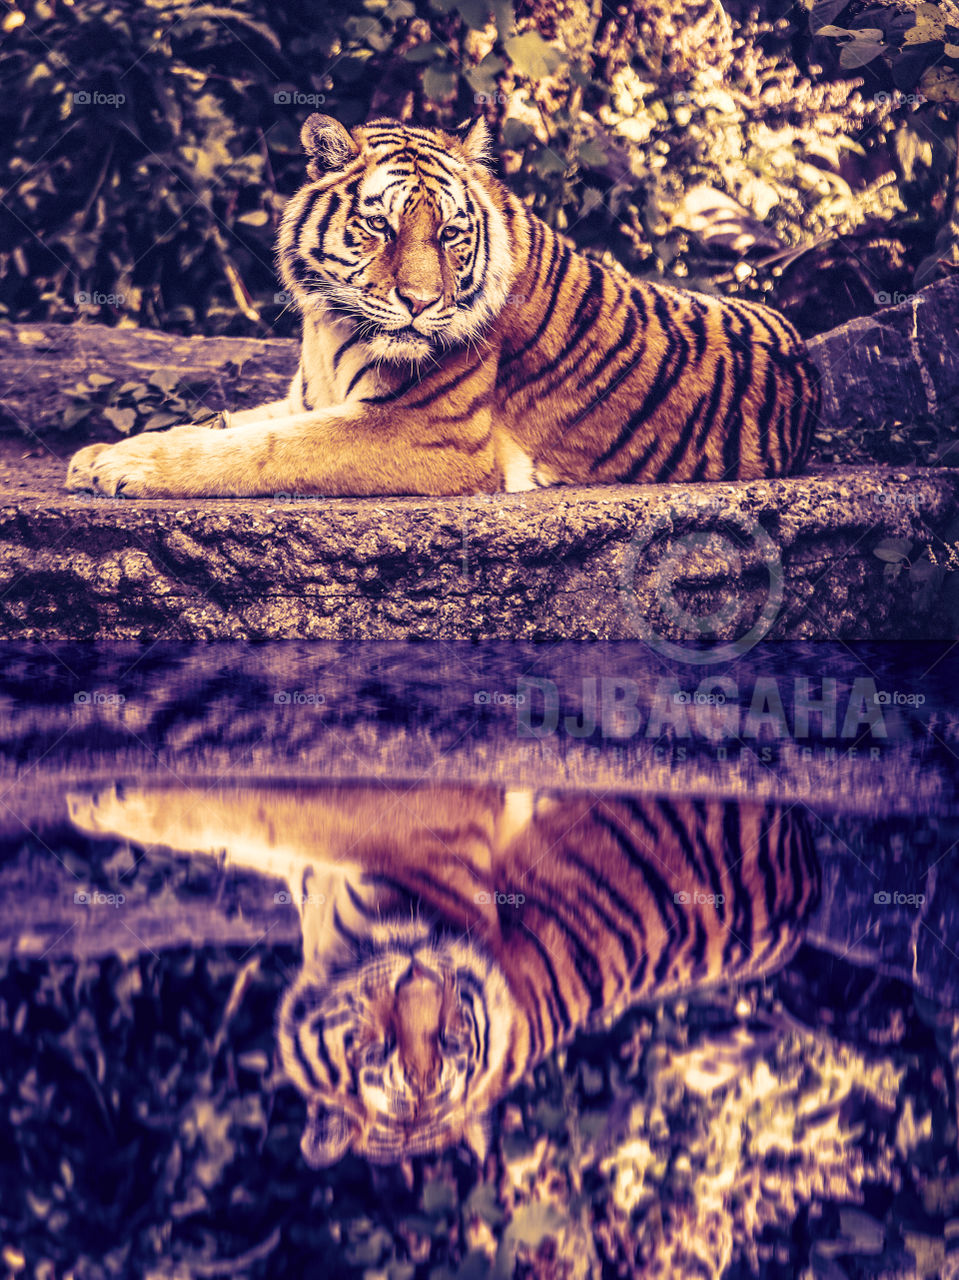 #globaltigerday!   #tigers #Water #reflecion #ps #adobe #photoshop #edits  #designgraphic  #effect